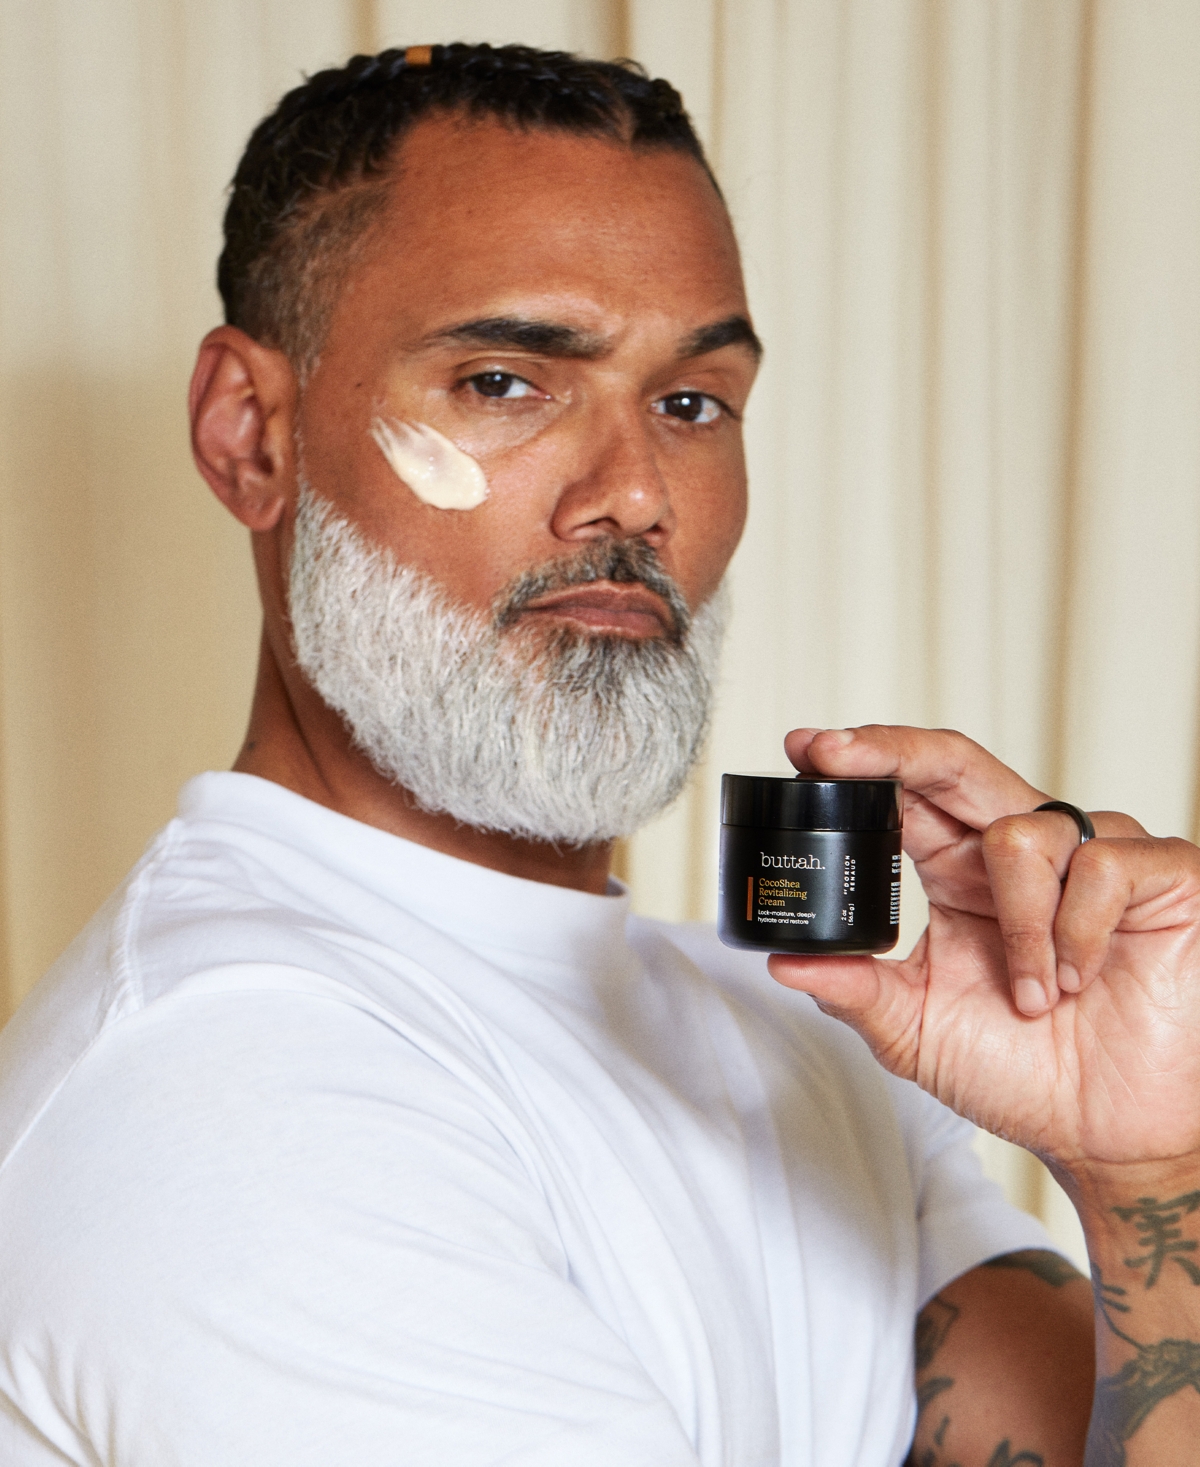 Shop Buttah Skin Limited Edition 3-pc Skin Transforming Kit With Cocoshea Revitalizing Cream In Multi,none